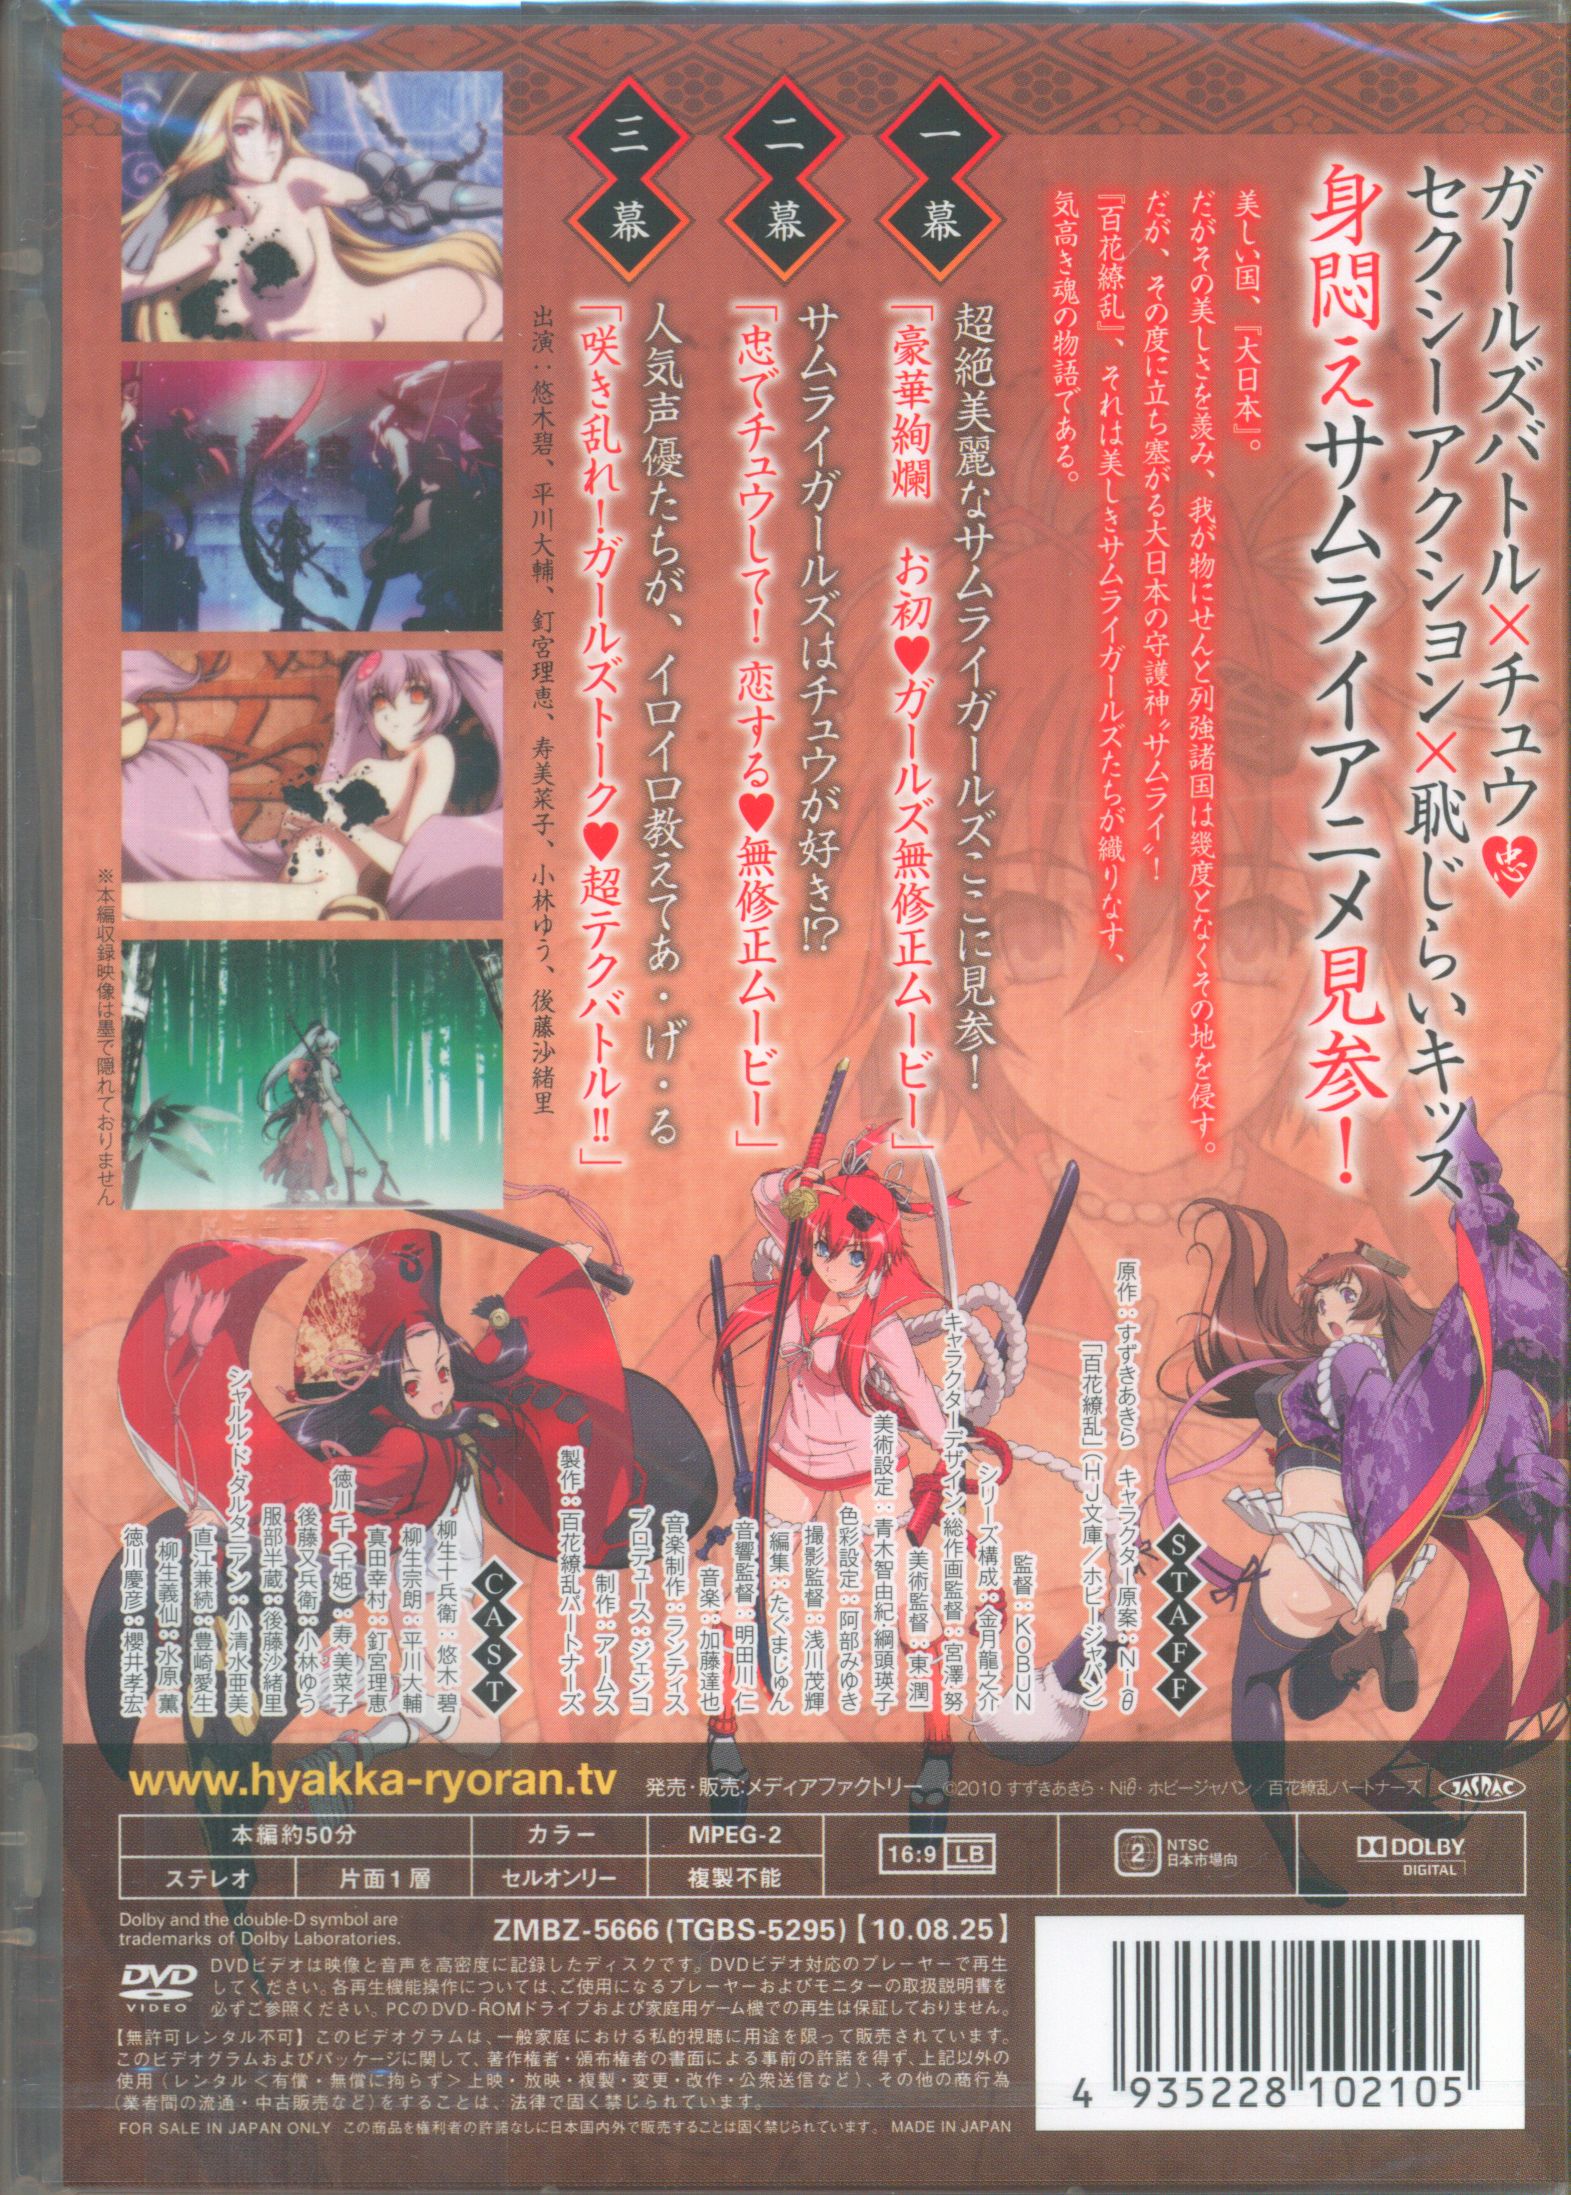 Anime Dvd Hyakka Ryouran Samurai Girls Zero Unopened Mandarake Online Shop